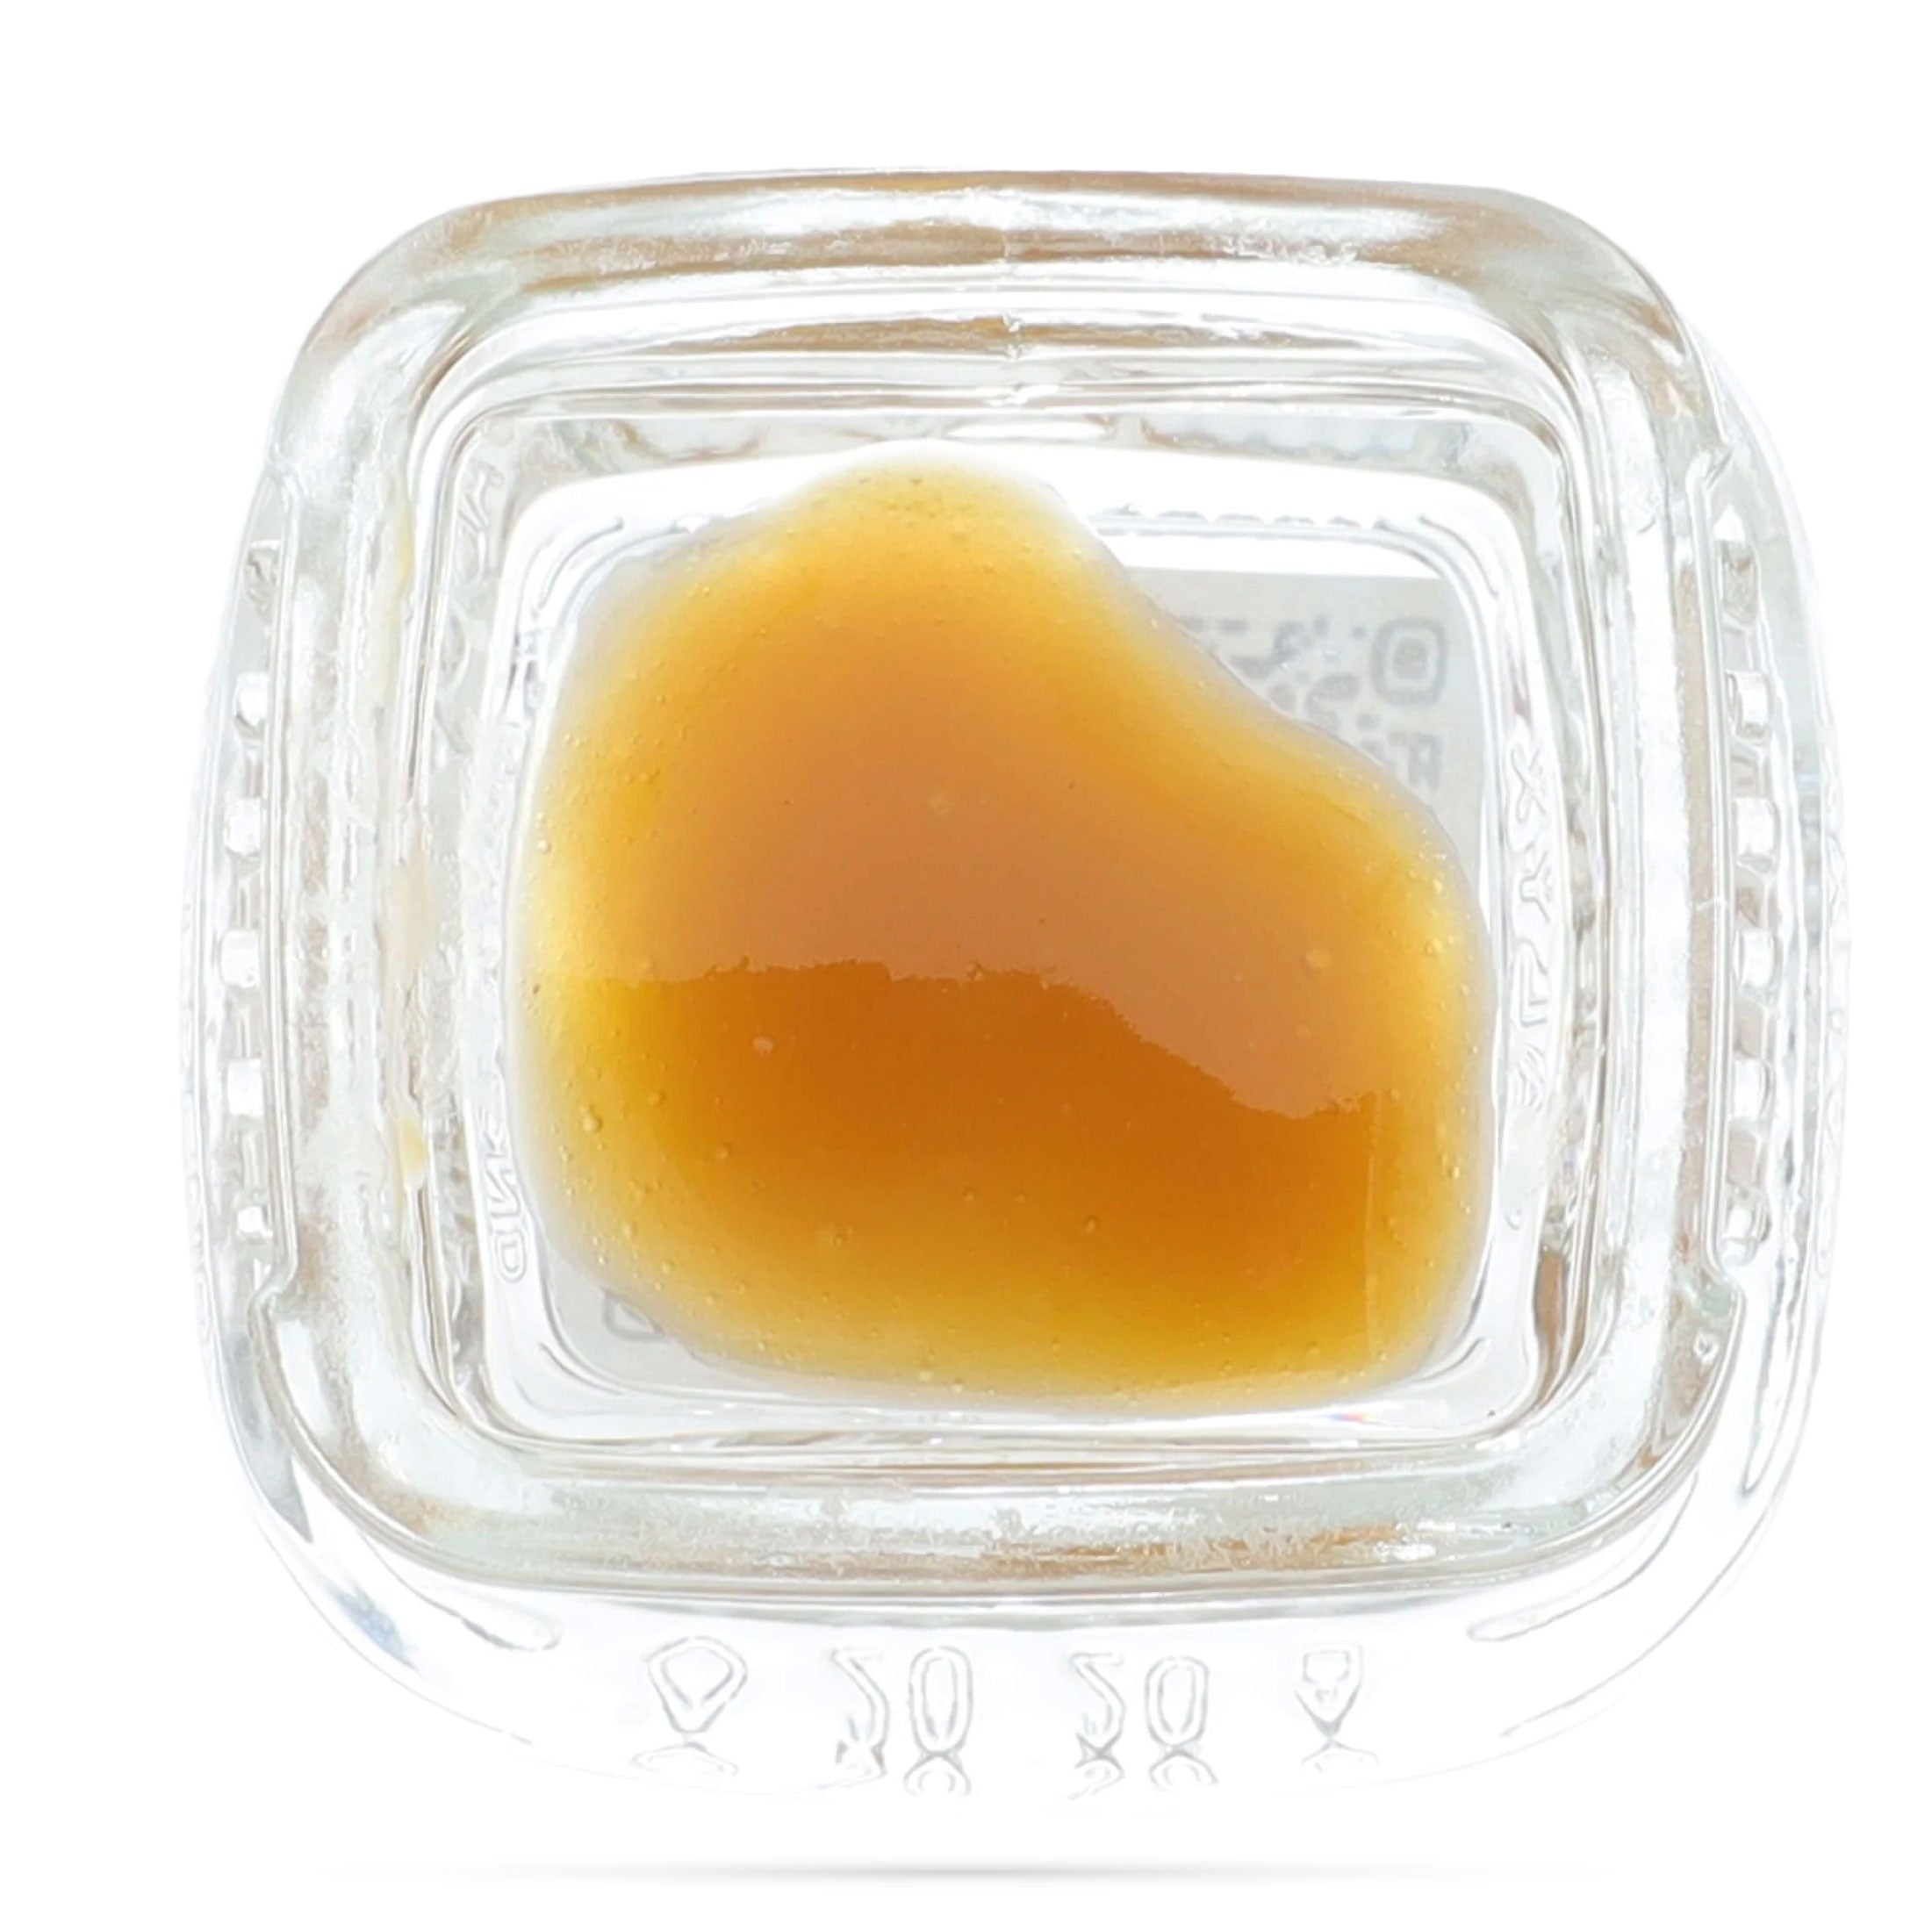 Image of a Calyx jar containing 1 gram of BaOx CBD Bubble Hash Rosin.